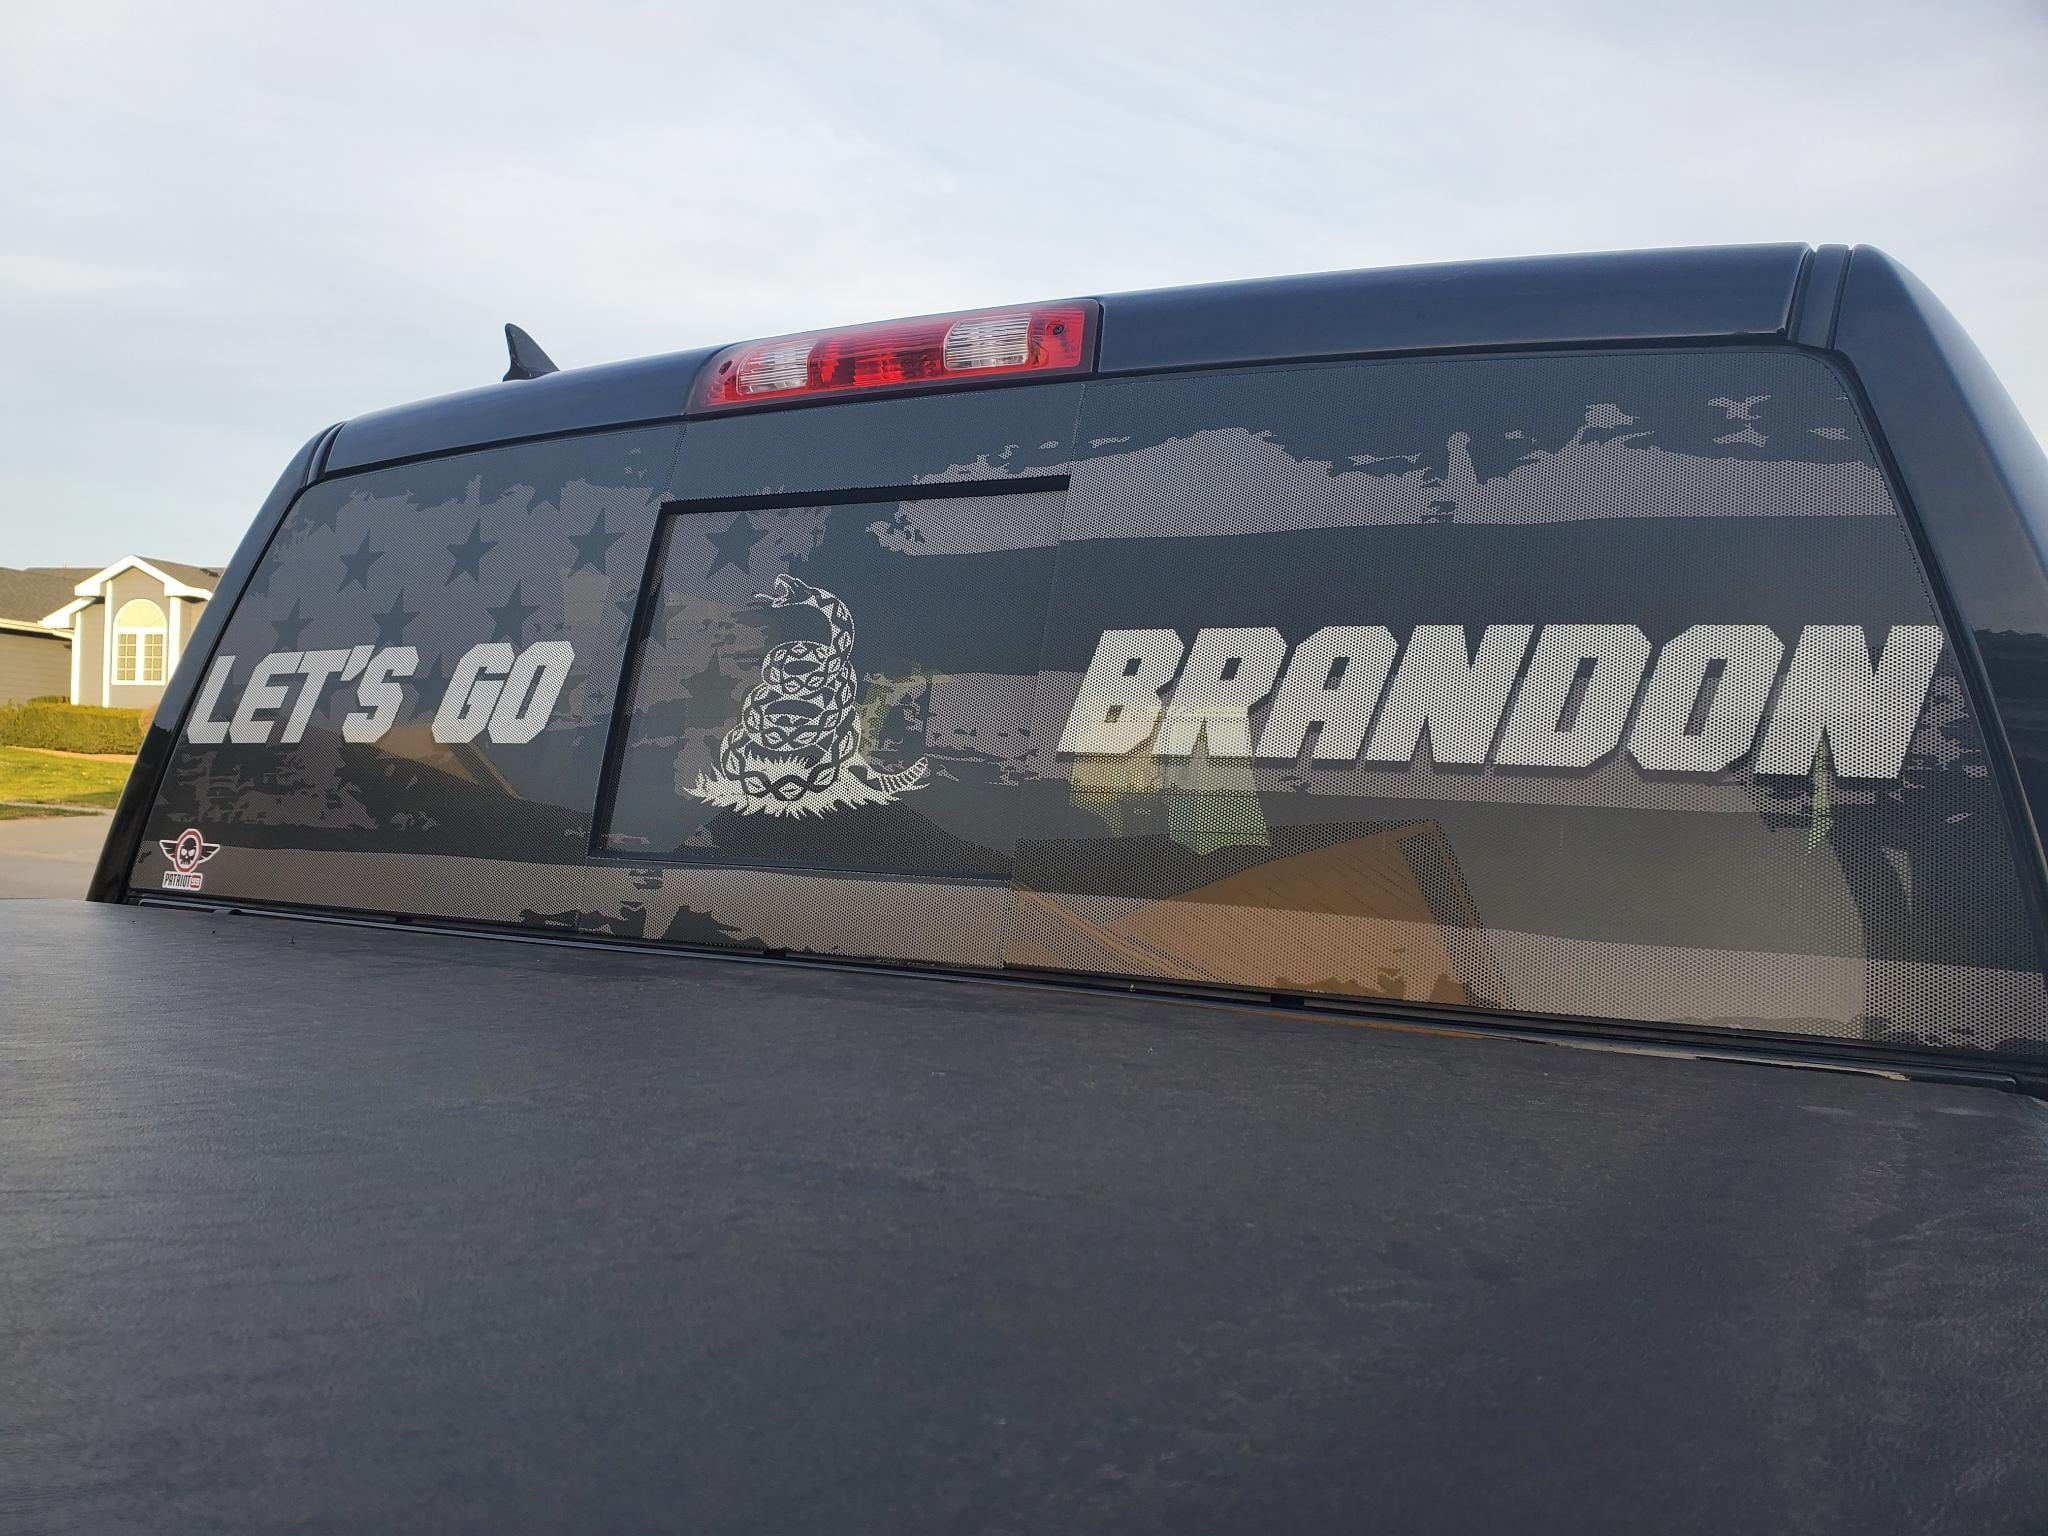 Let's Go Brandon Stickers